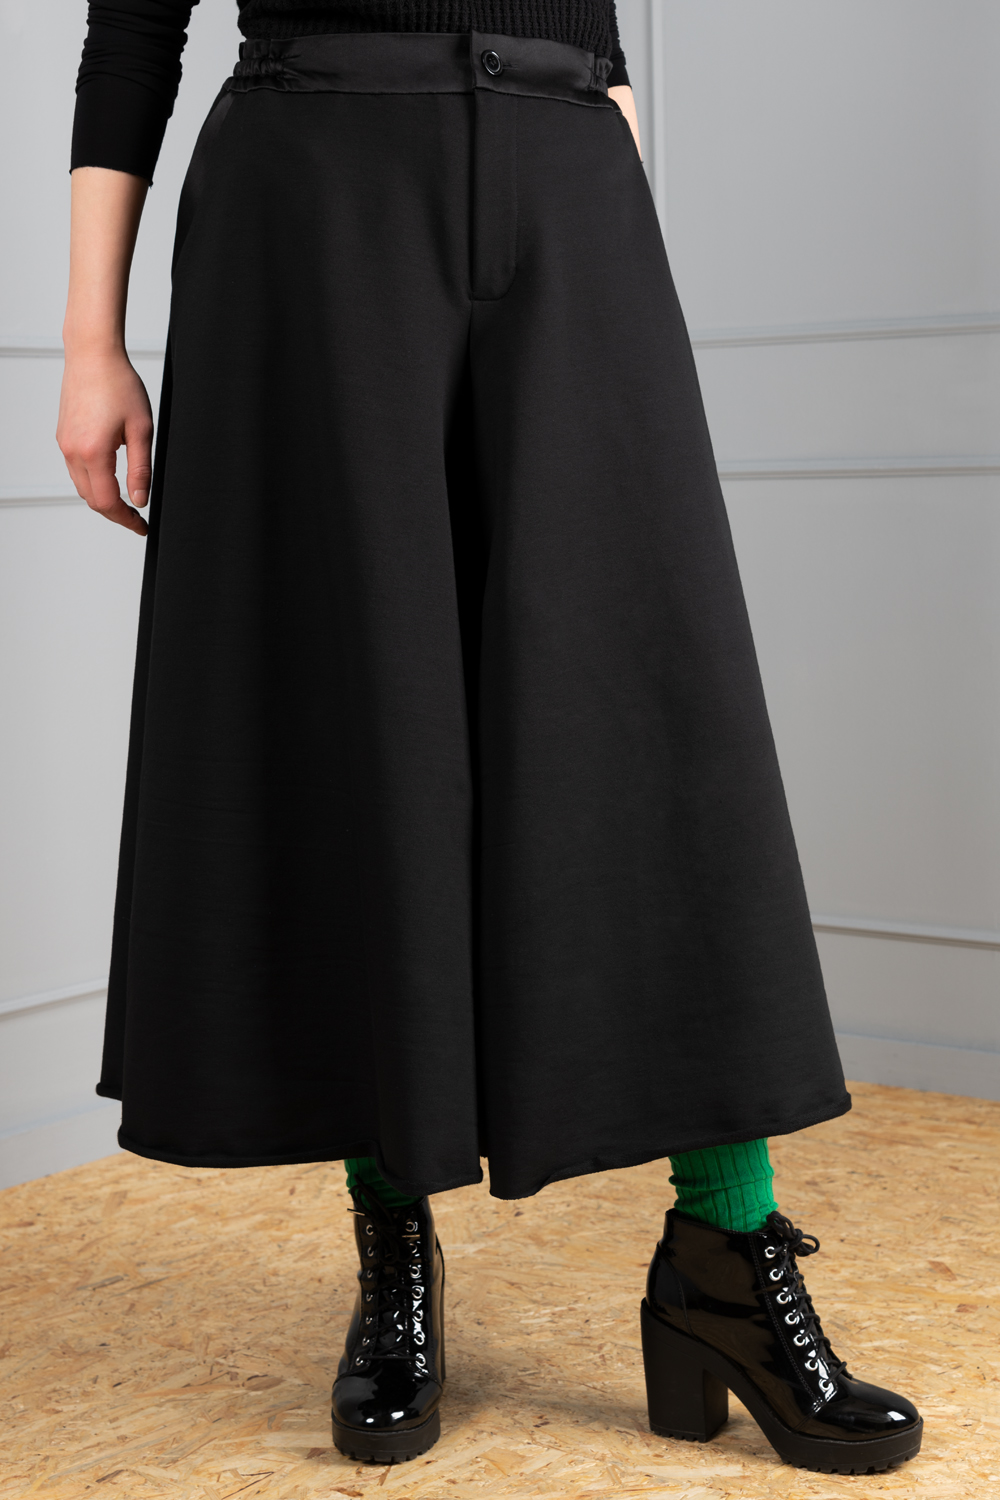 Comfortable women's skirt trousers